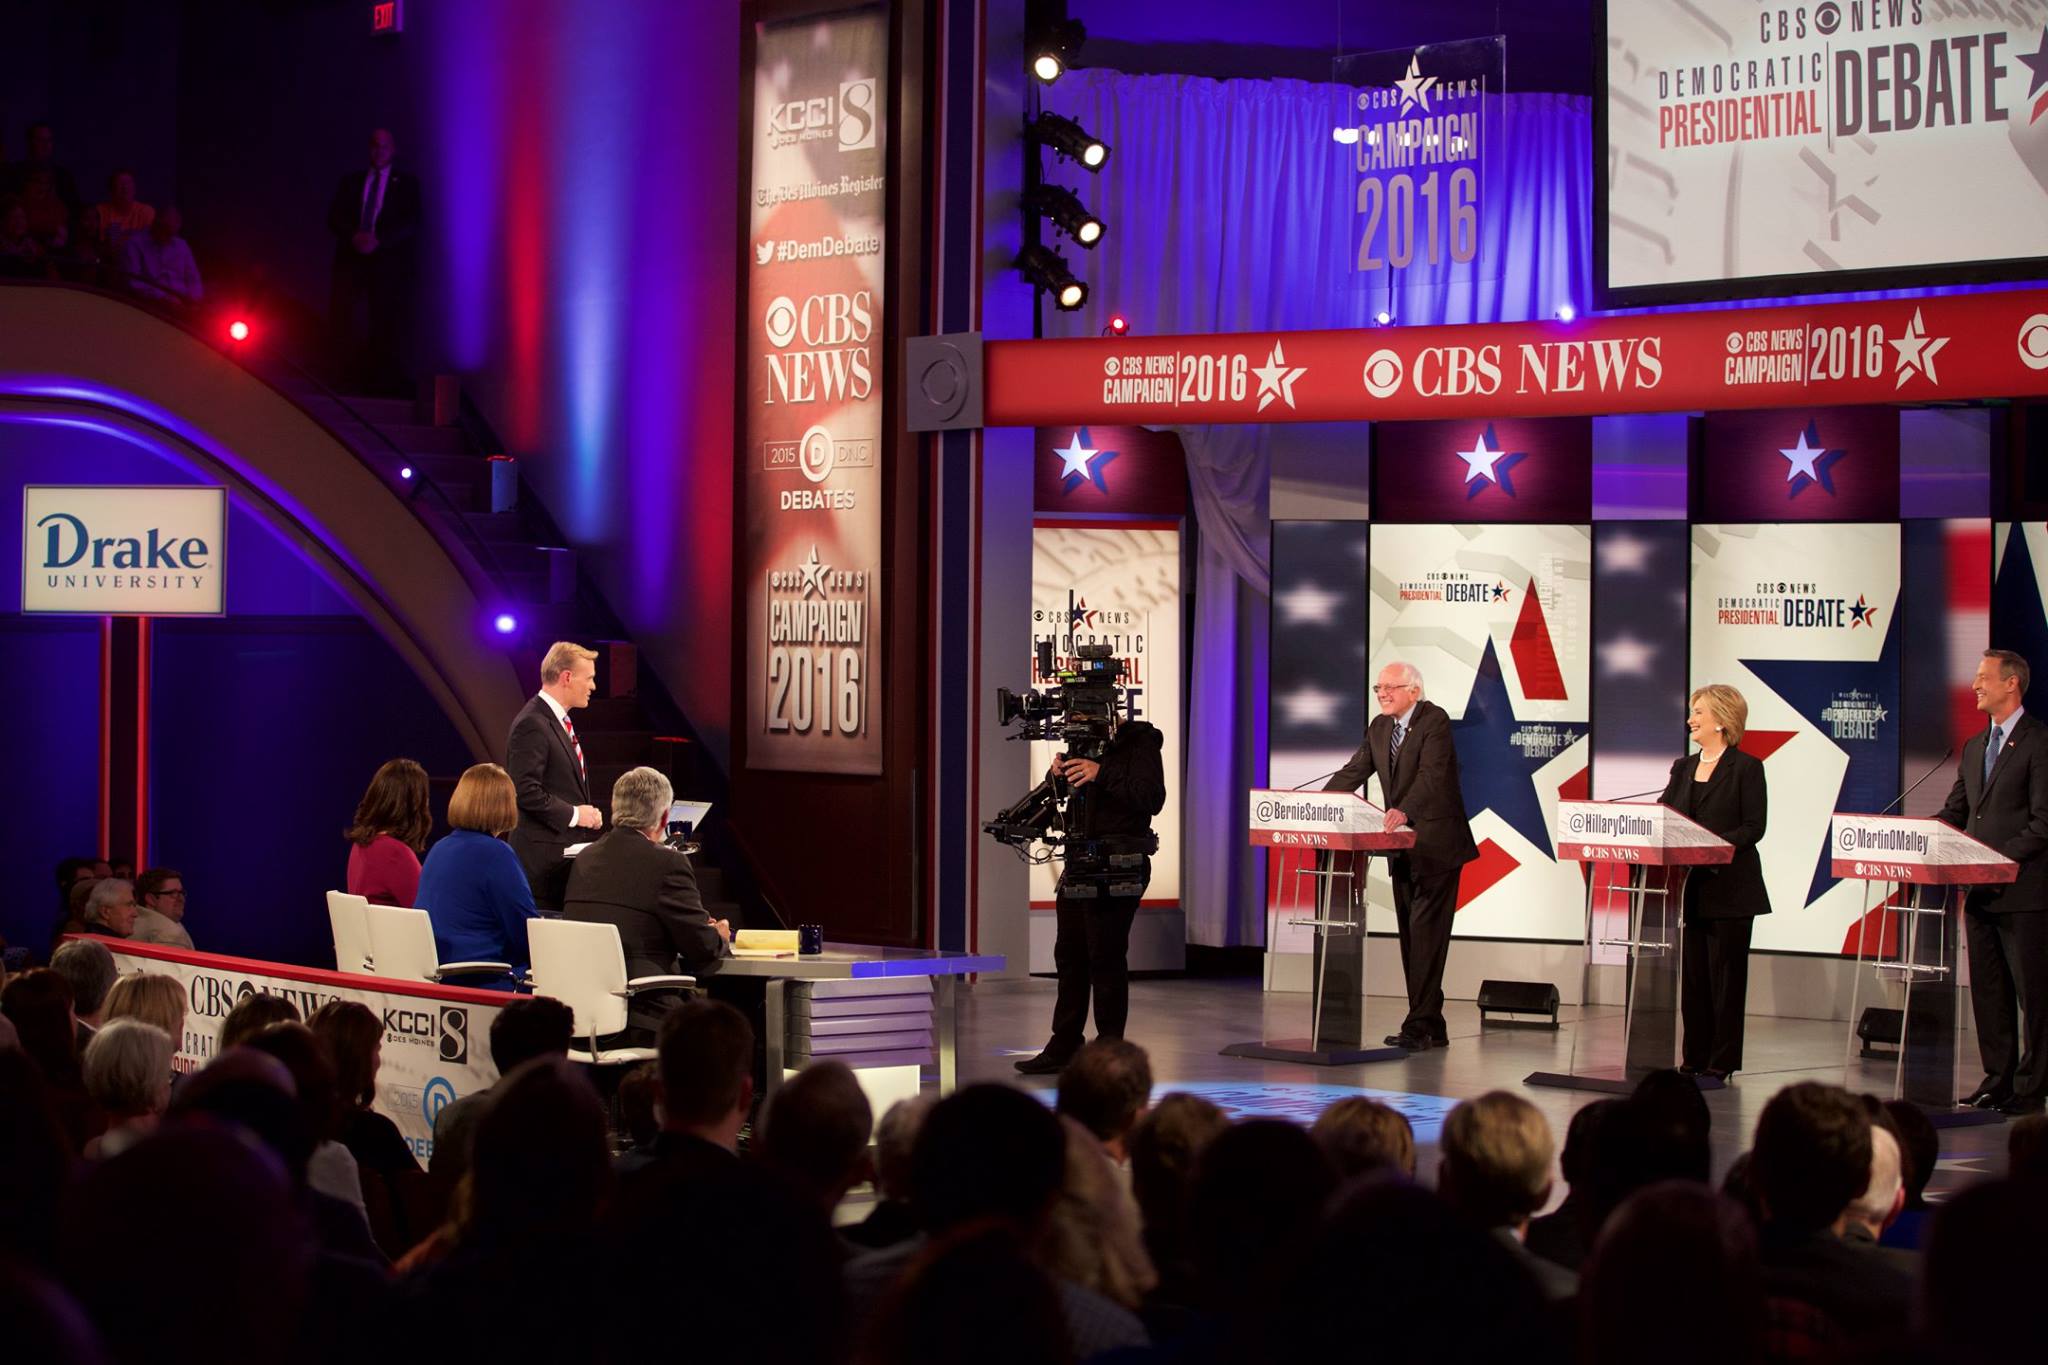 Behind the scenes at the Democratic presidential debate - Drake University Newsroom